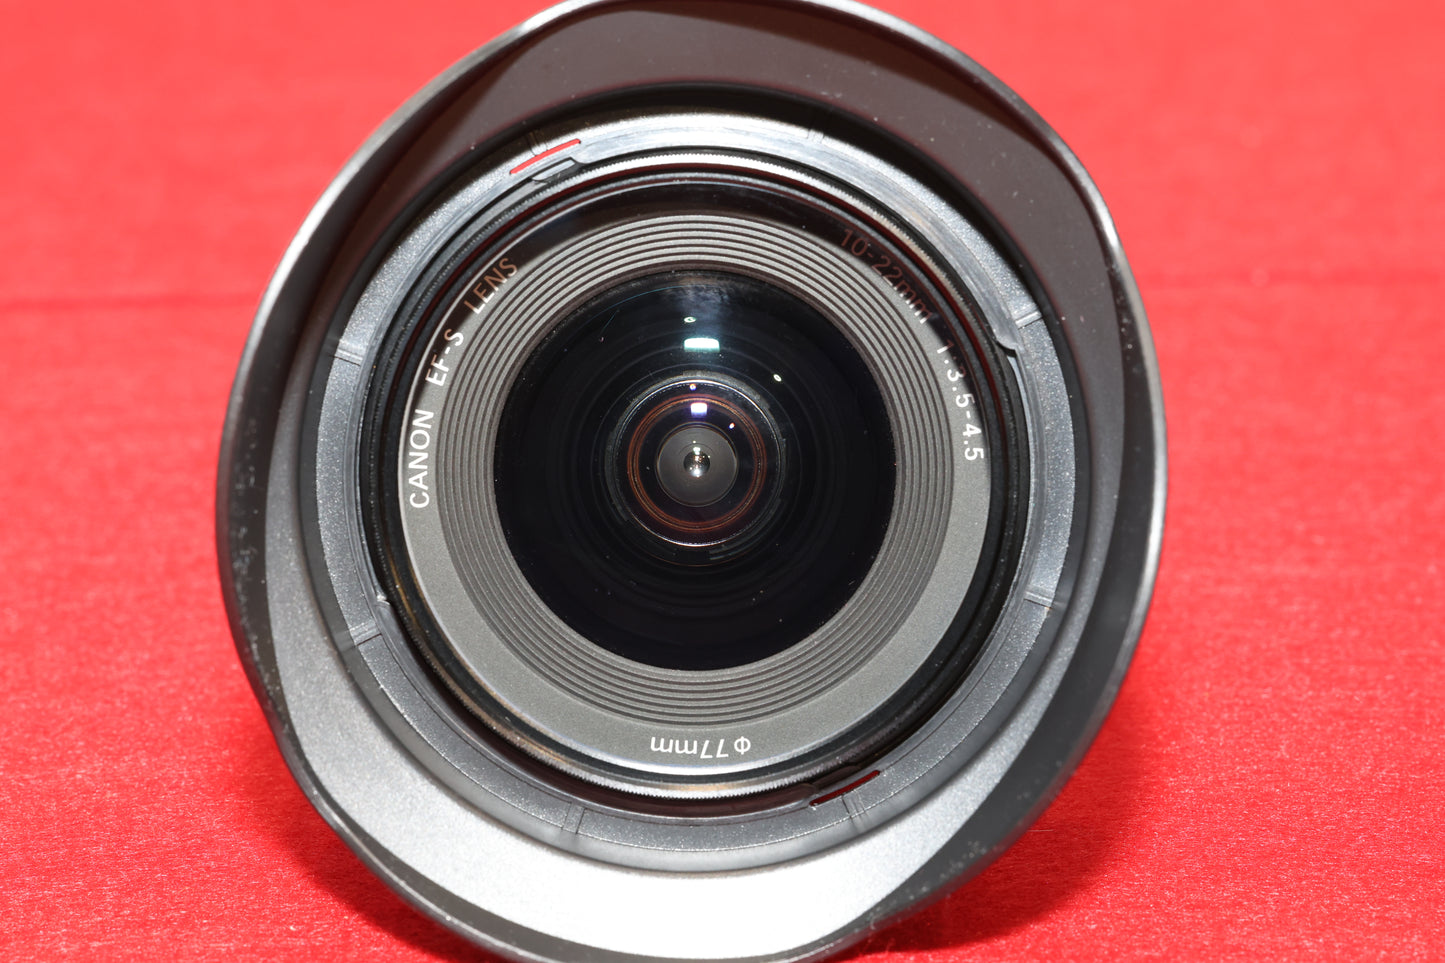 Gebrauchtware - Canon EF-S 10-22mm 3.5-4.5